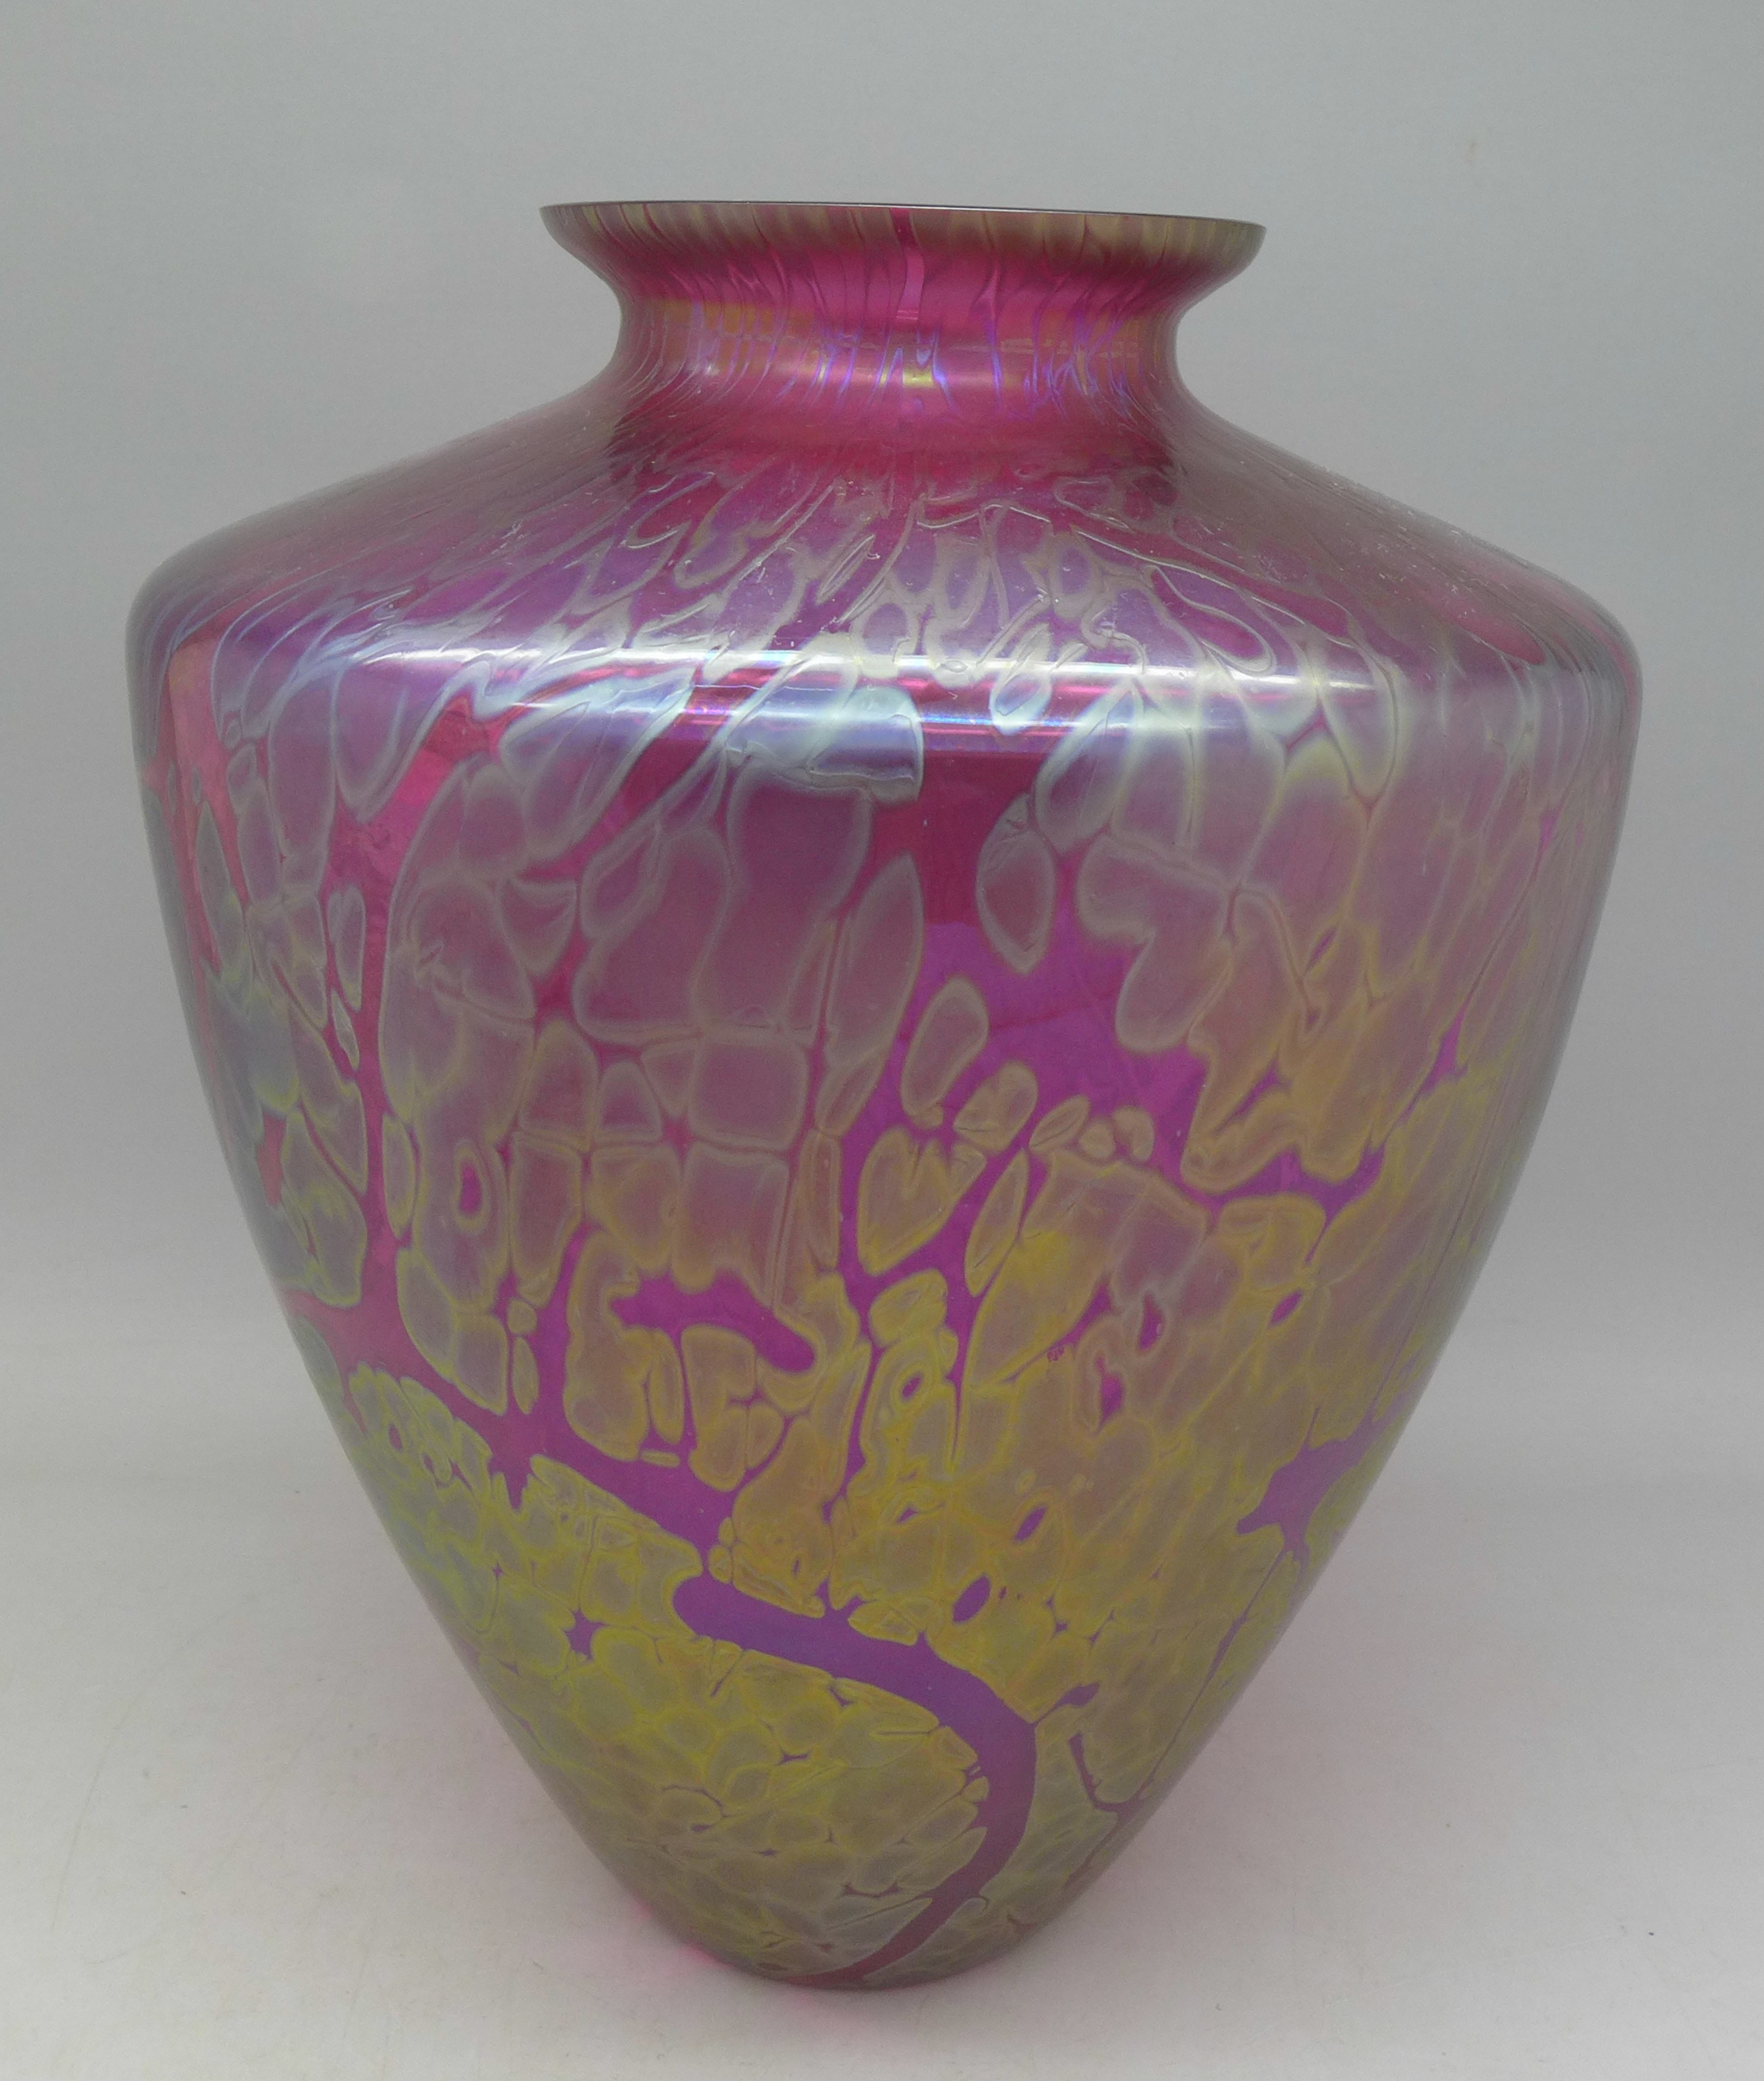 A glass Royal Brierley Studio vase,